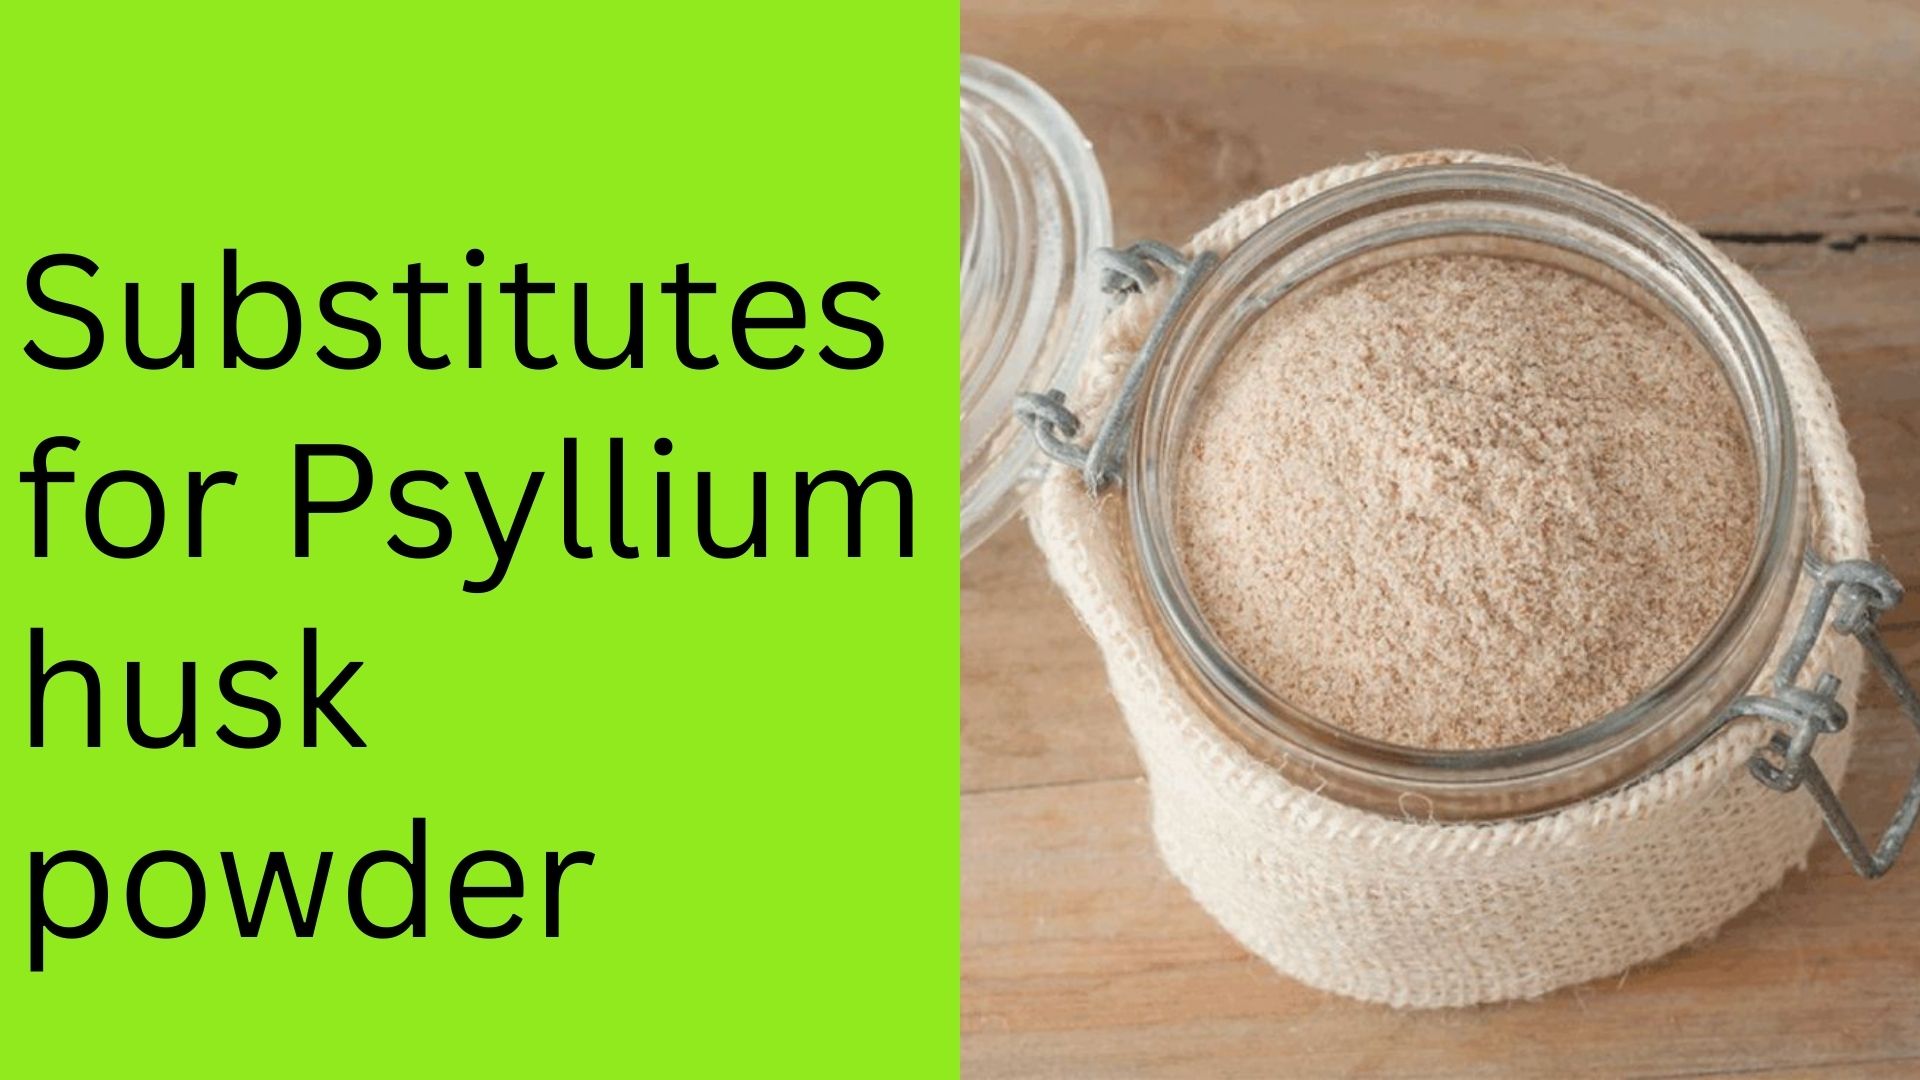 Substitutes for Psyllium husk powder